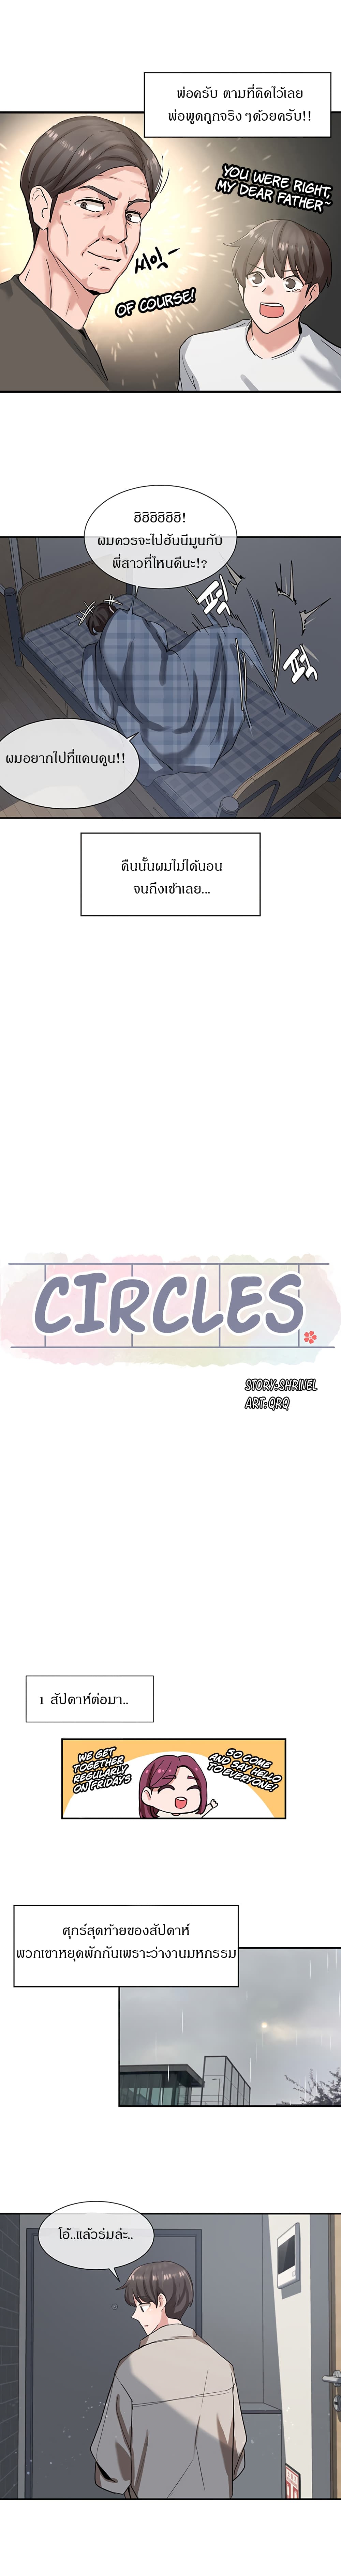 Theater Society Circles6 (6)